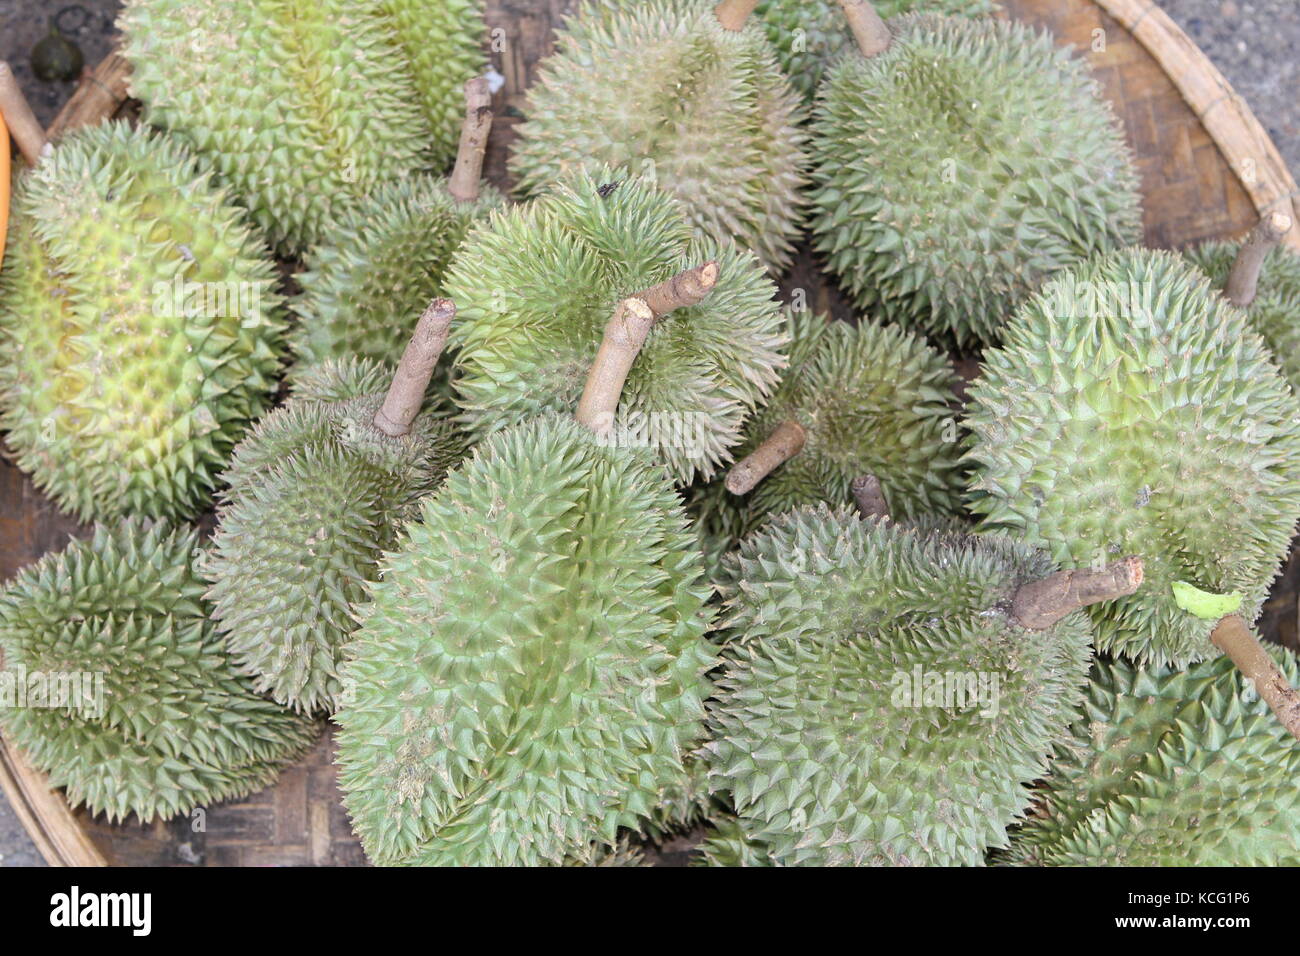 Durian Frucht in Südostasien - Durian fruit in Southeast Asia Stock Photo